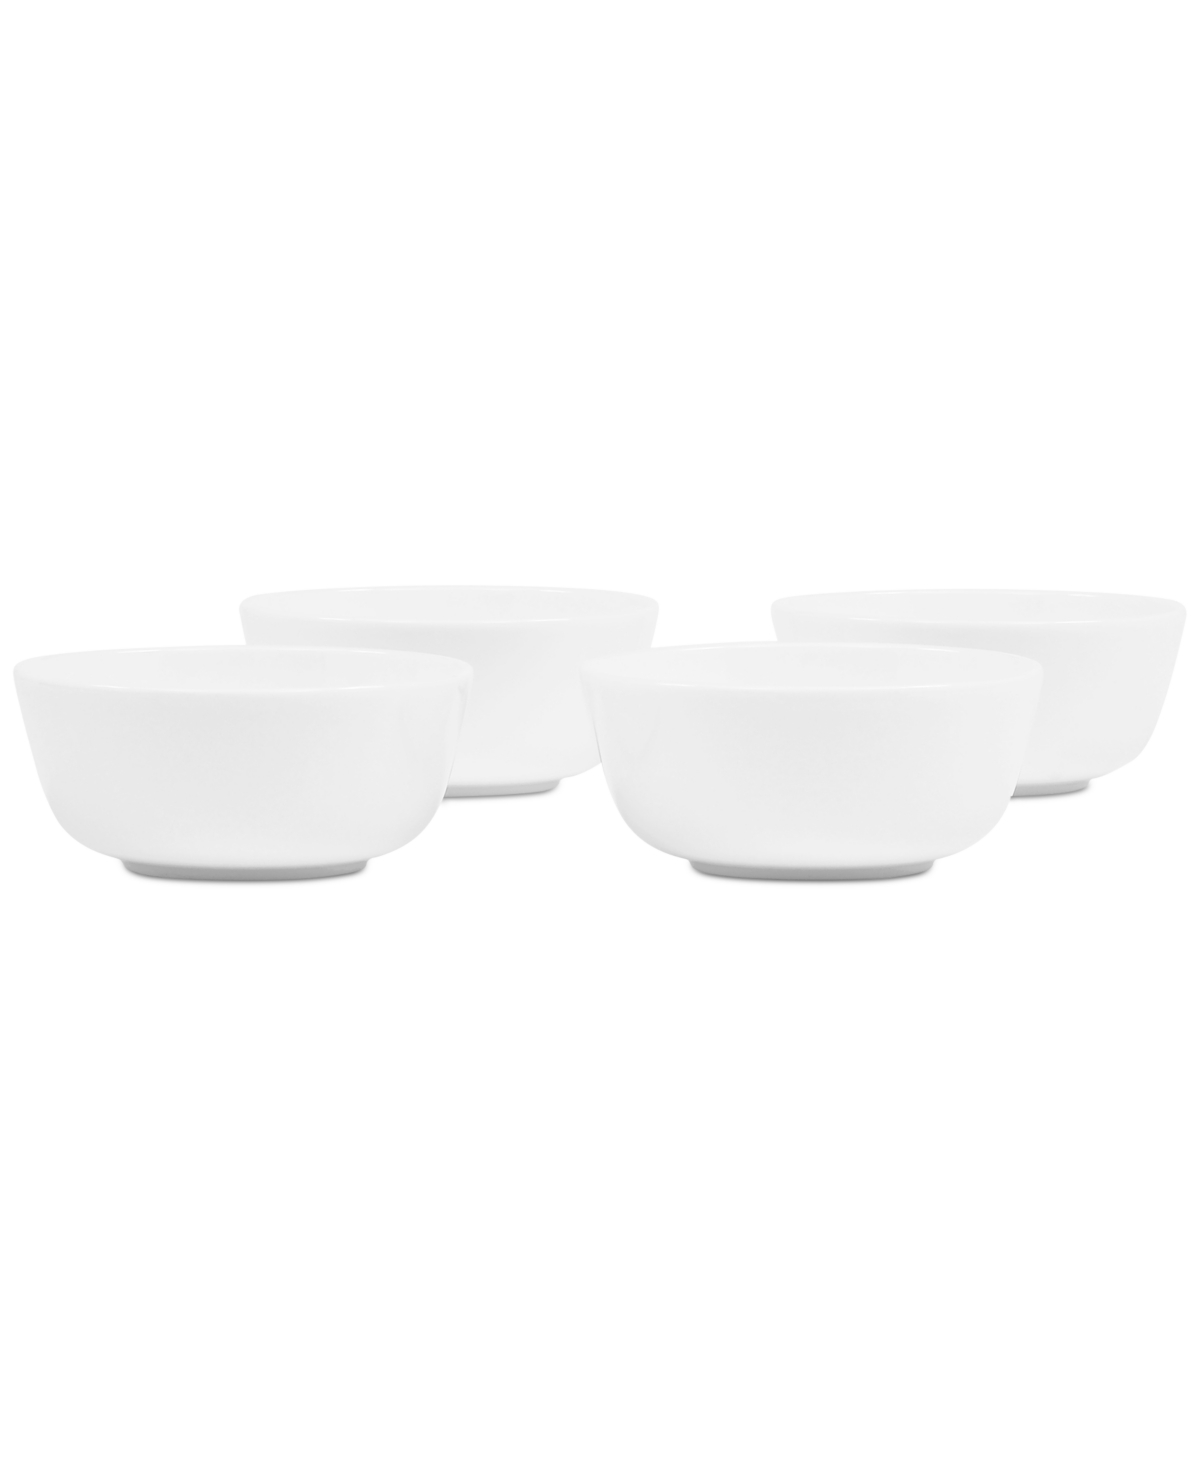 Marc Newson Small Bowls, Set of 4 - White